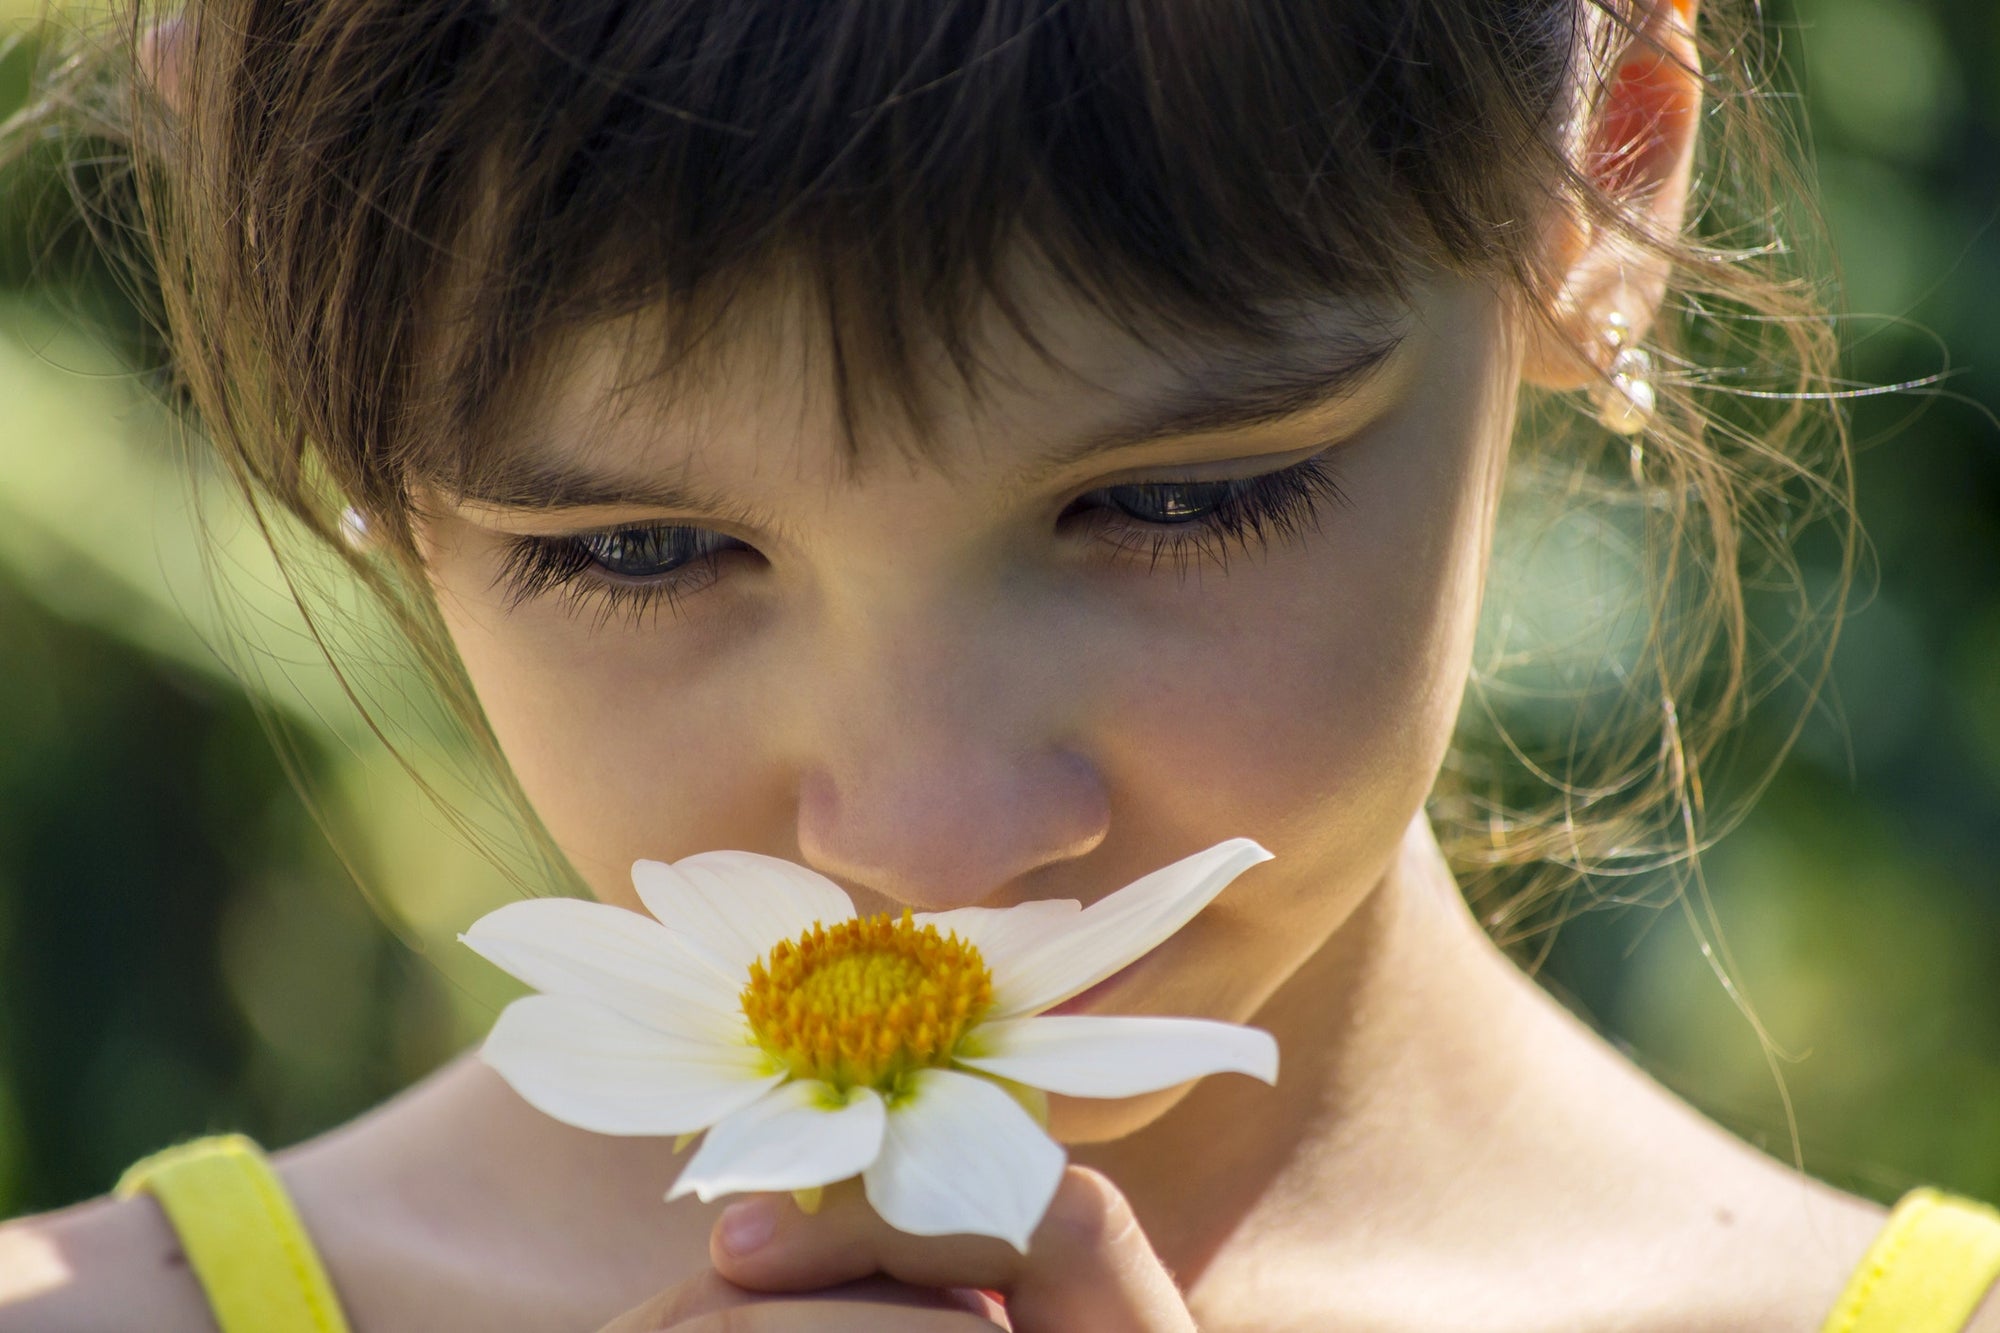 A little girl smelling flowers in a garden